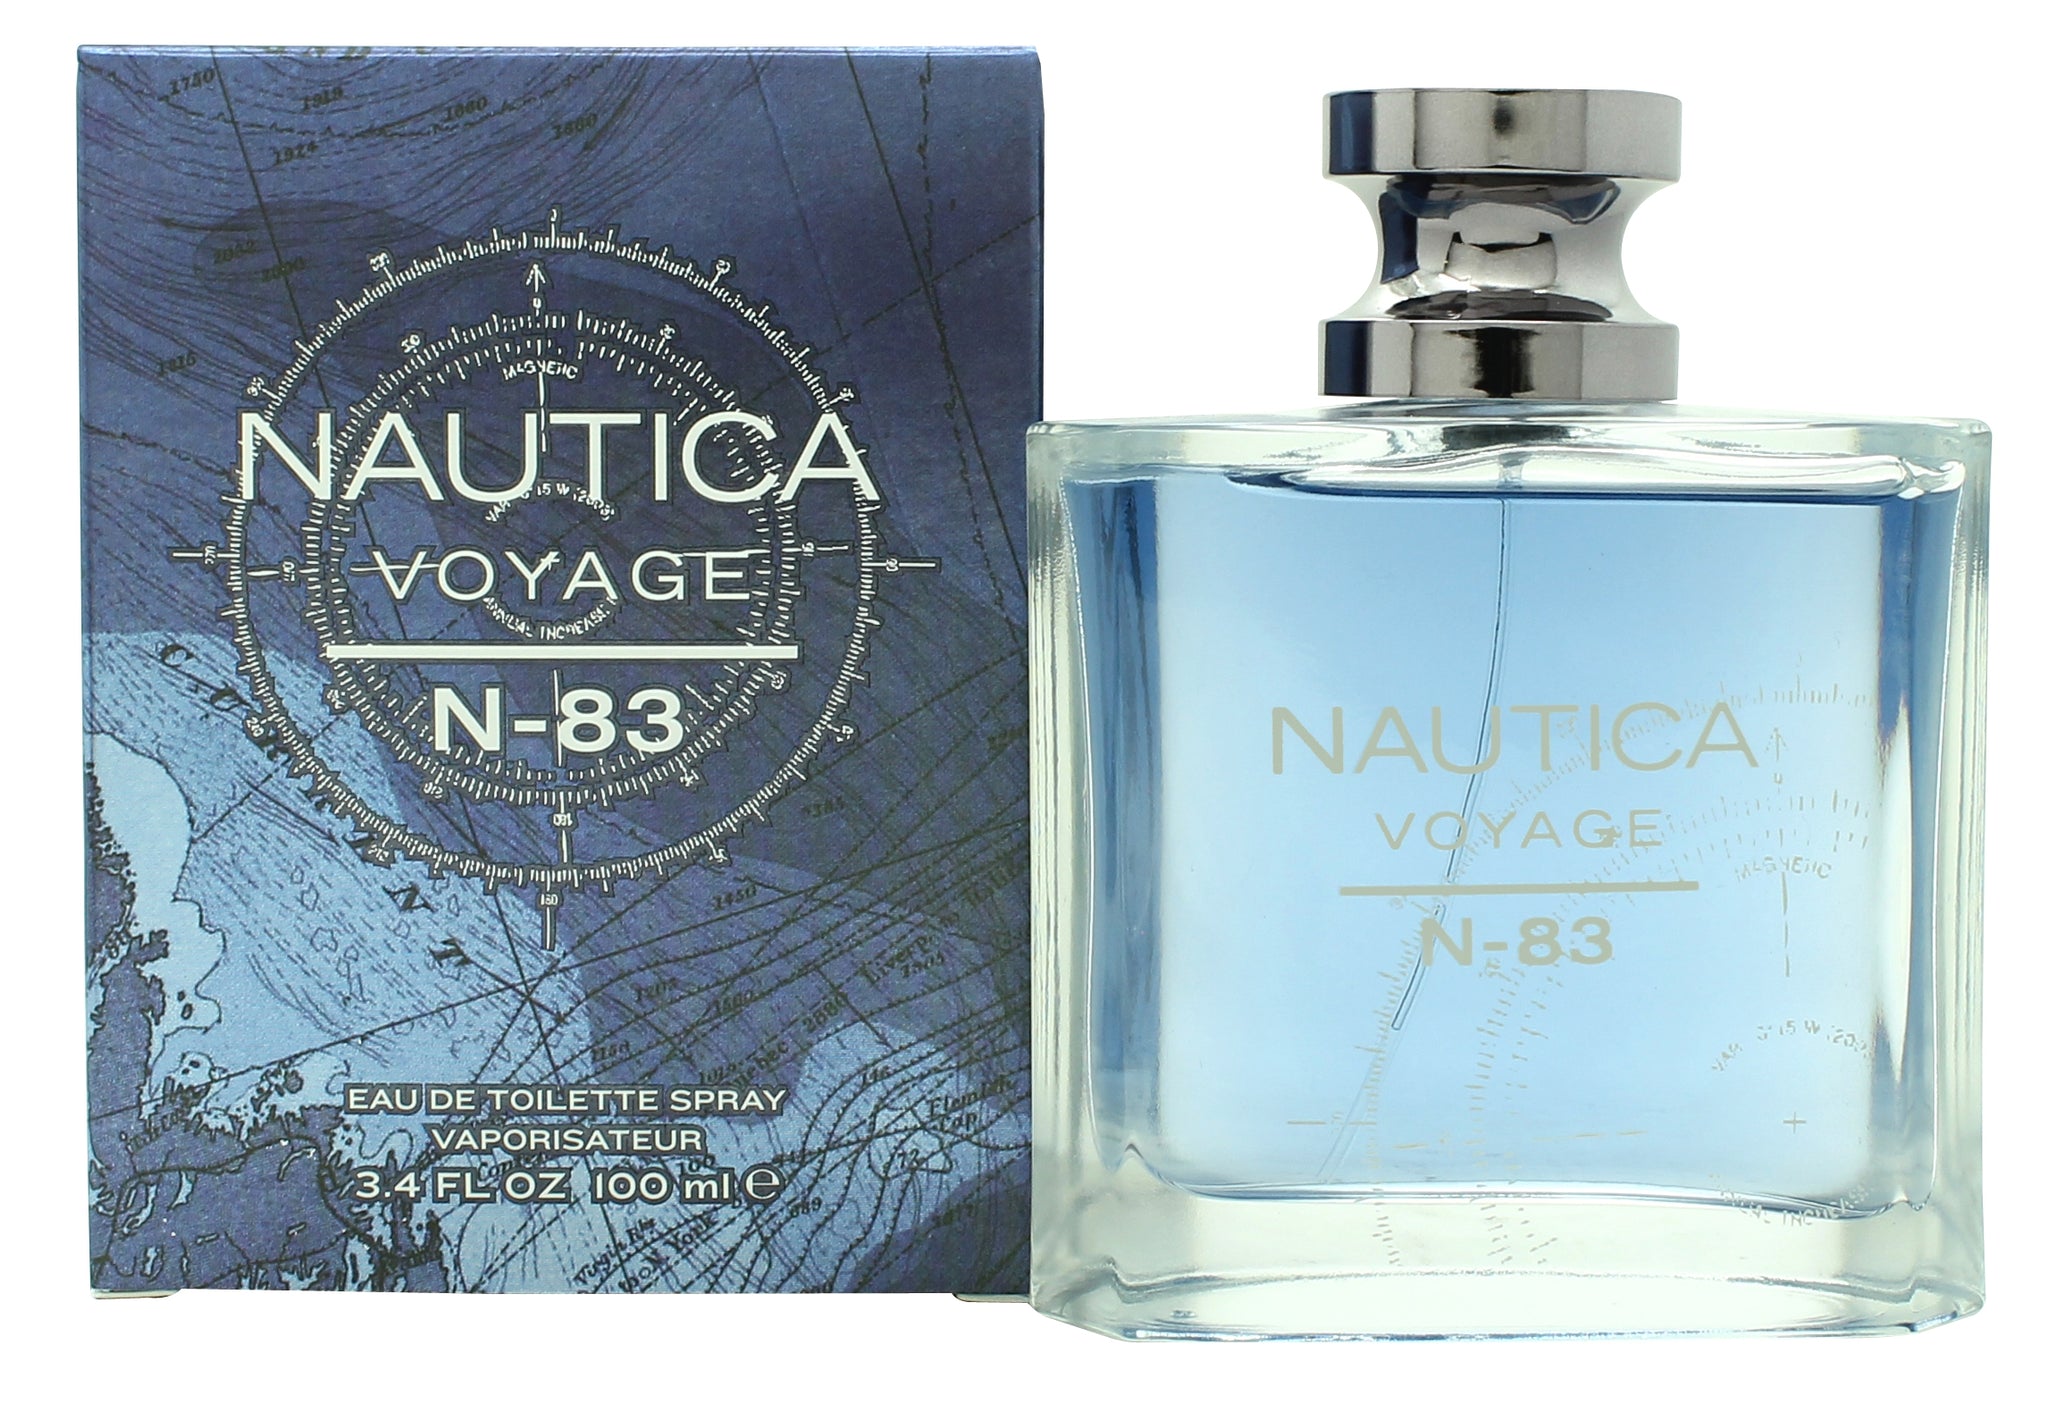 Nautica Voyage N-83 Eau de Toilette 100ml Spray